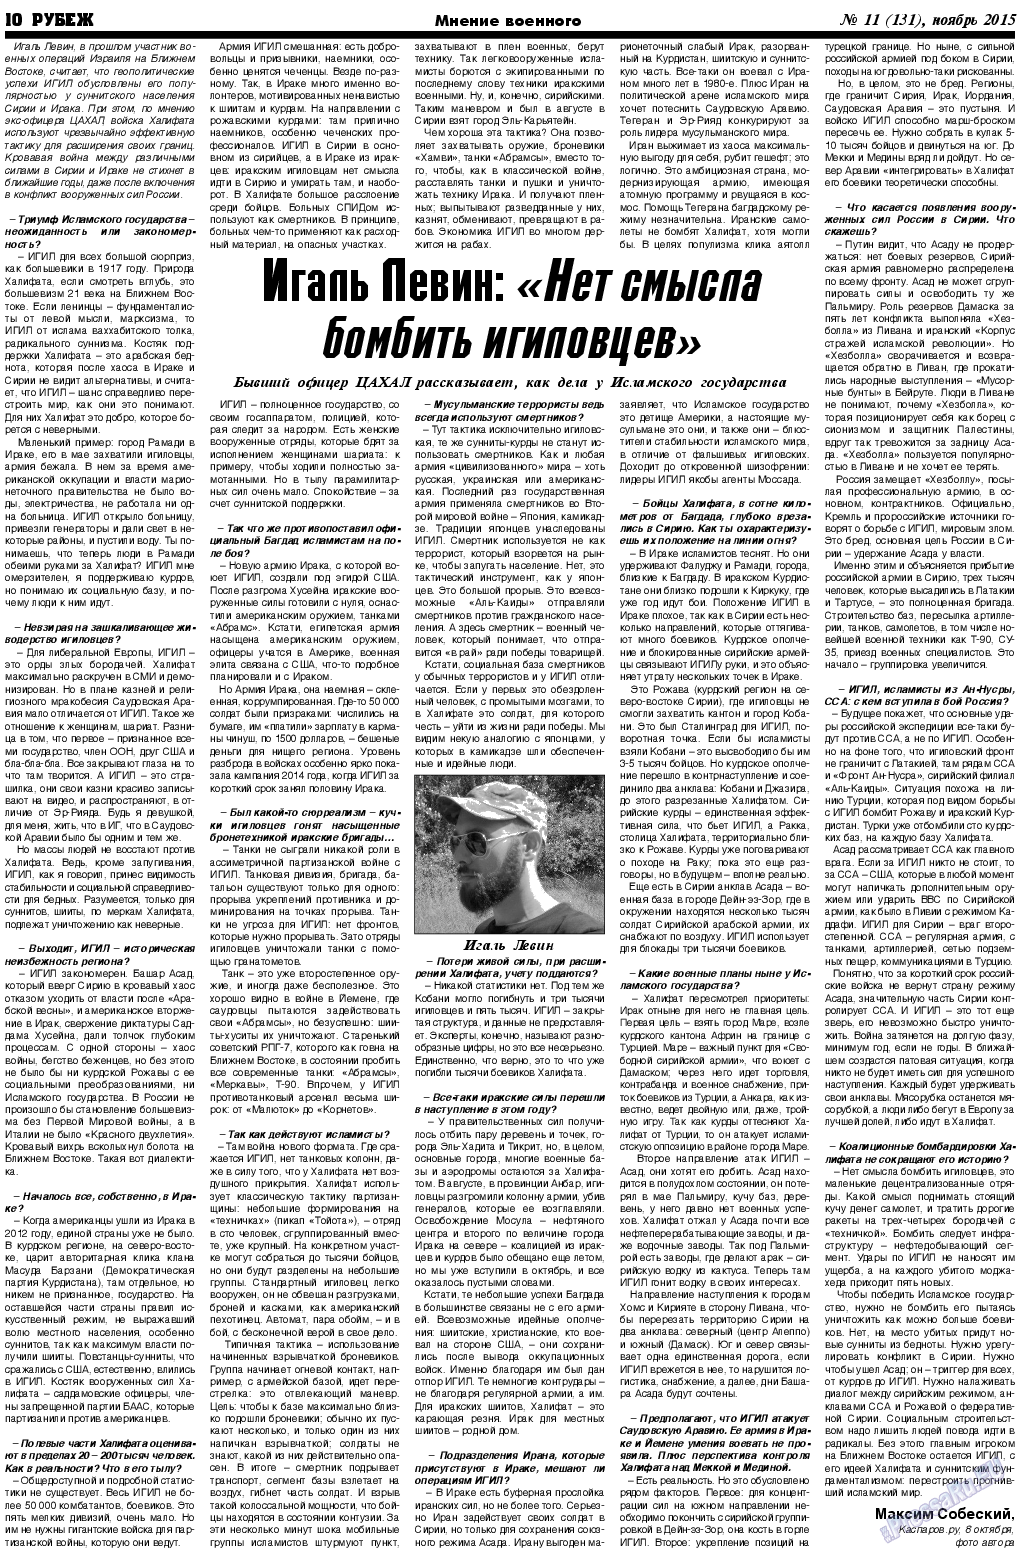 Рубеж, газета. 2015 №11 стр.10